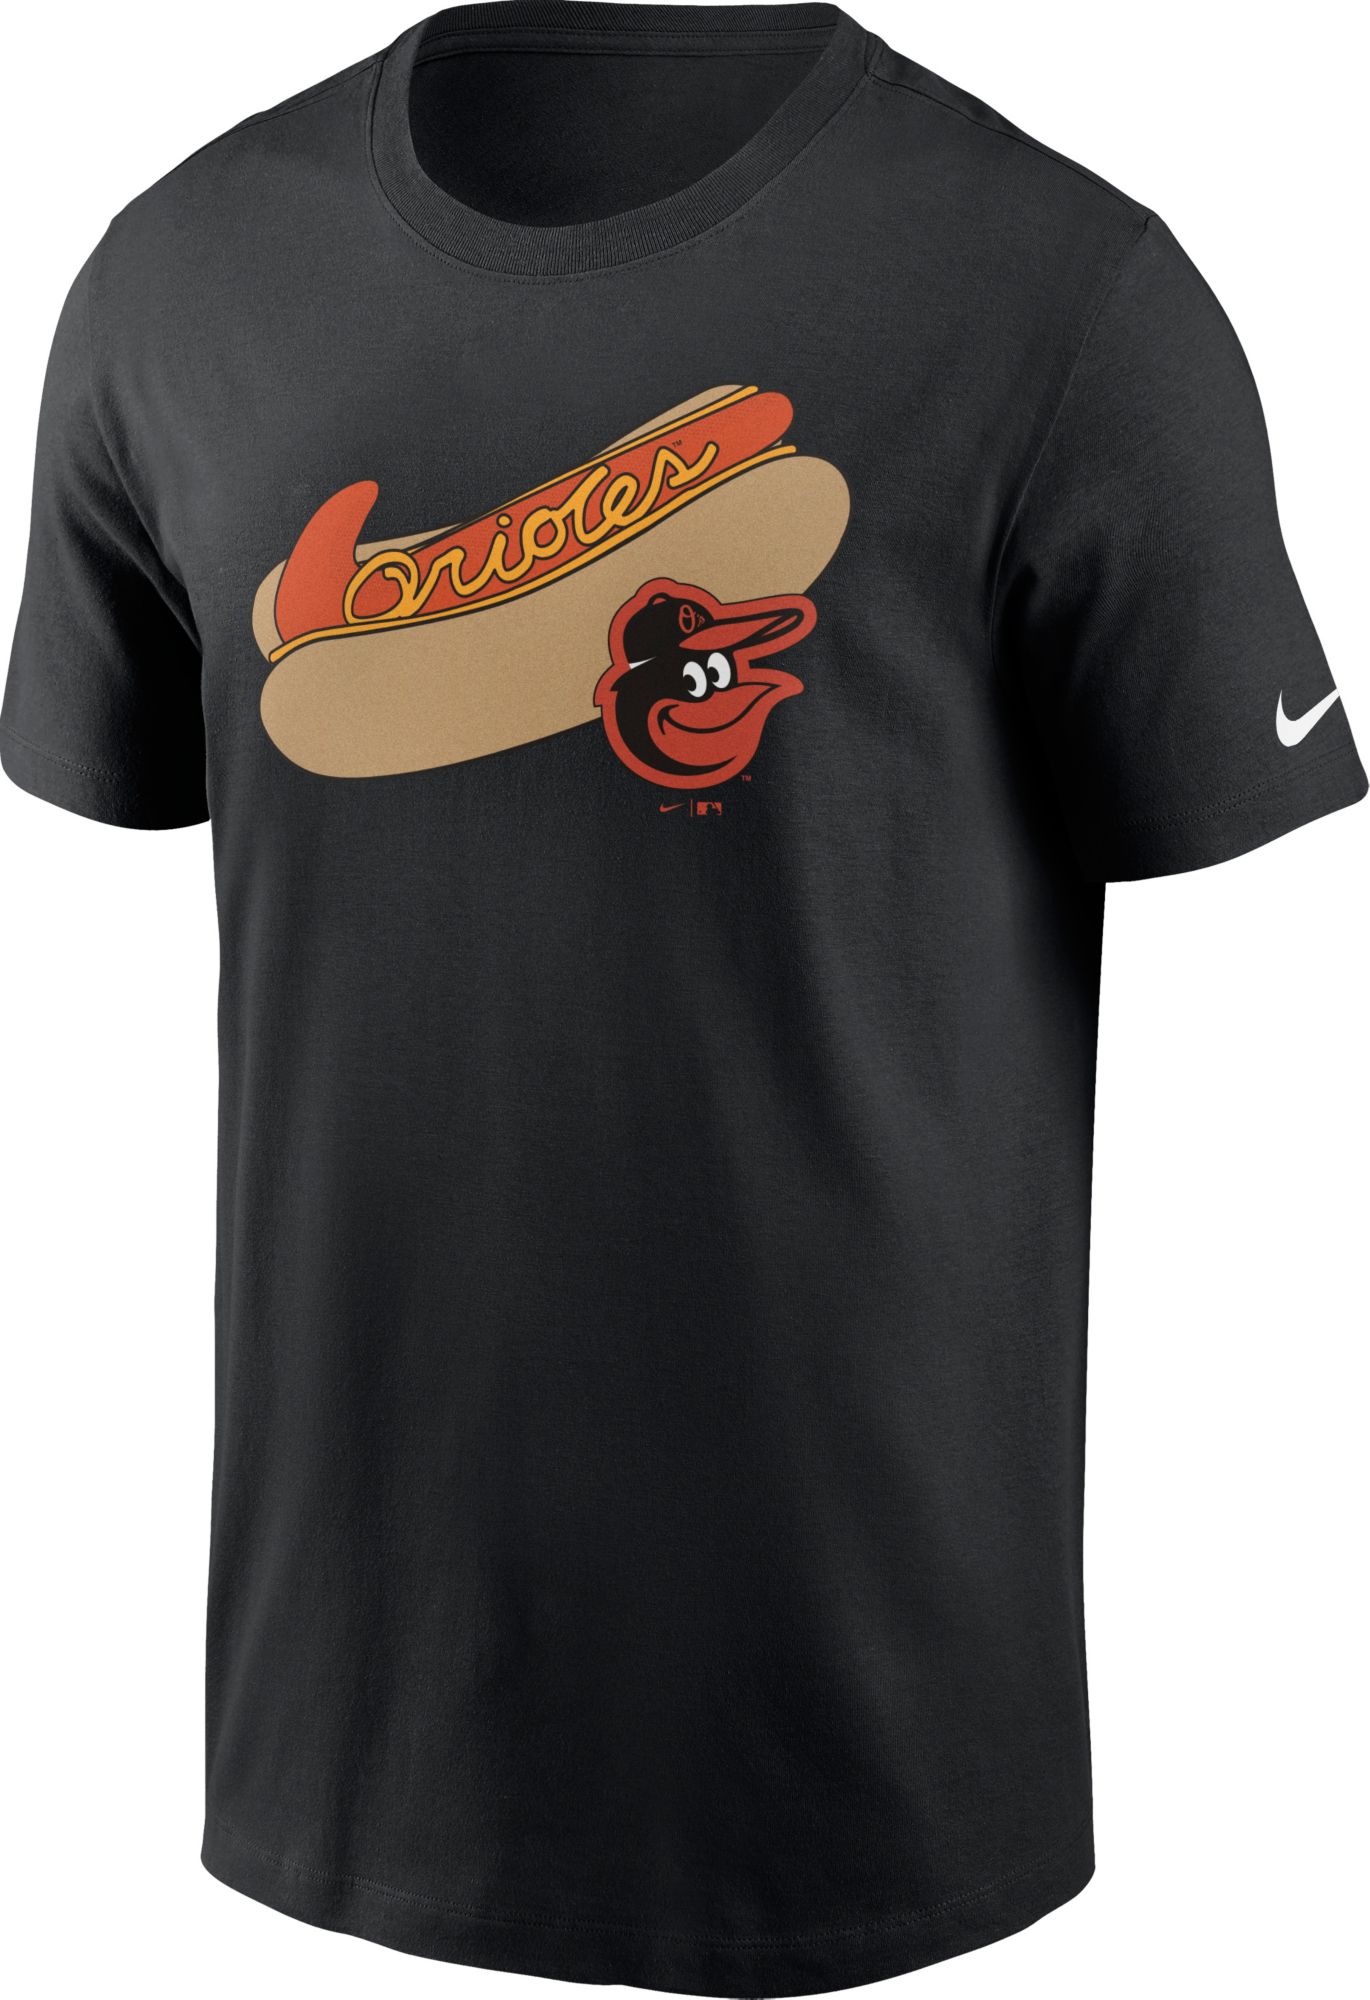 hot dog race t shirt orioles